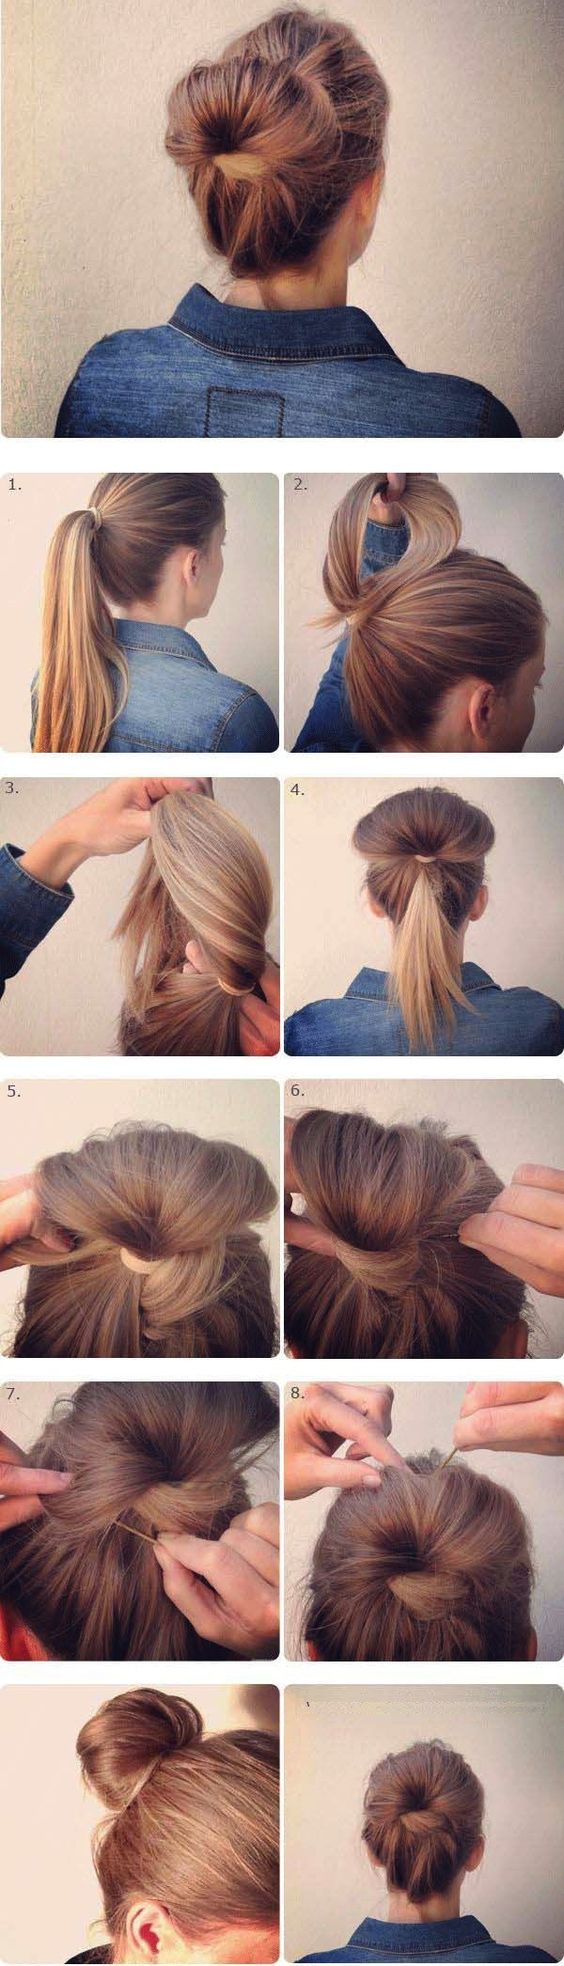 10 peinados ideales para controlar tu cabello esponjado | Mujer de 10